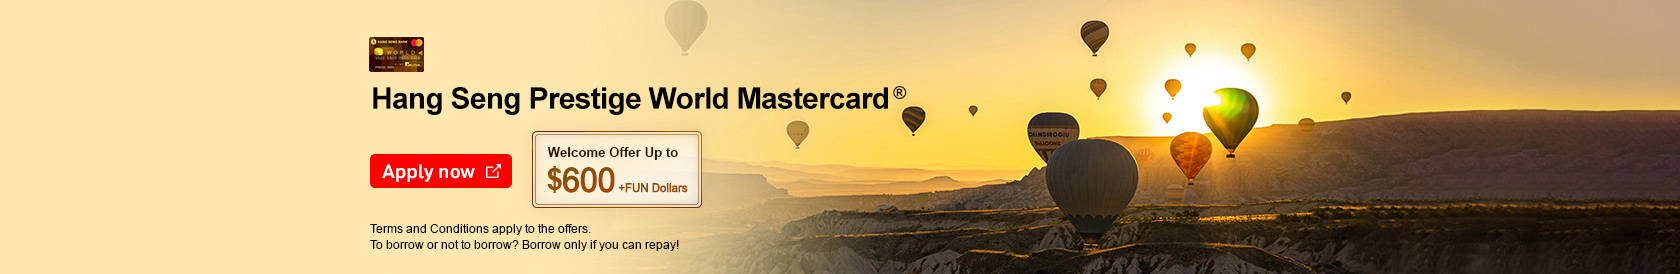 Hang Seng Prestige World Mastercard®